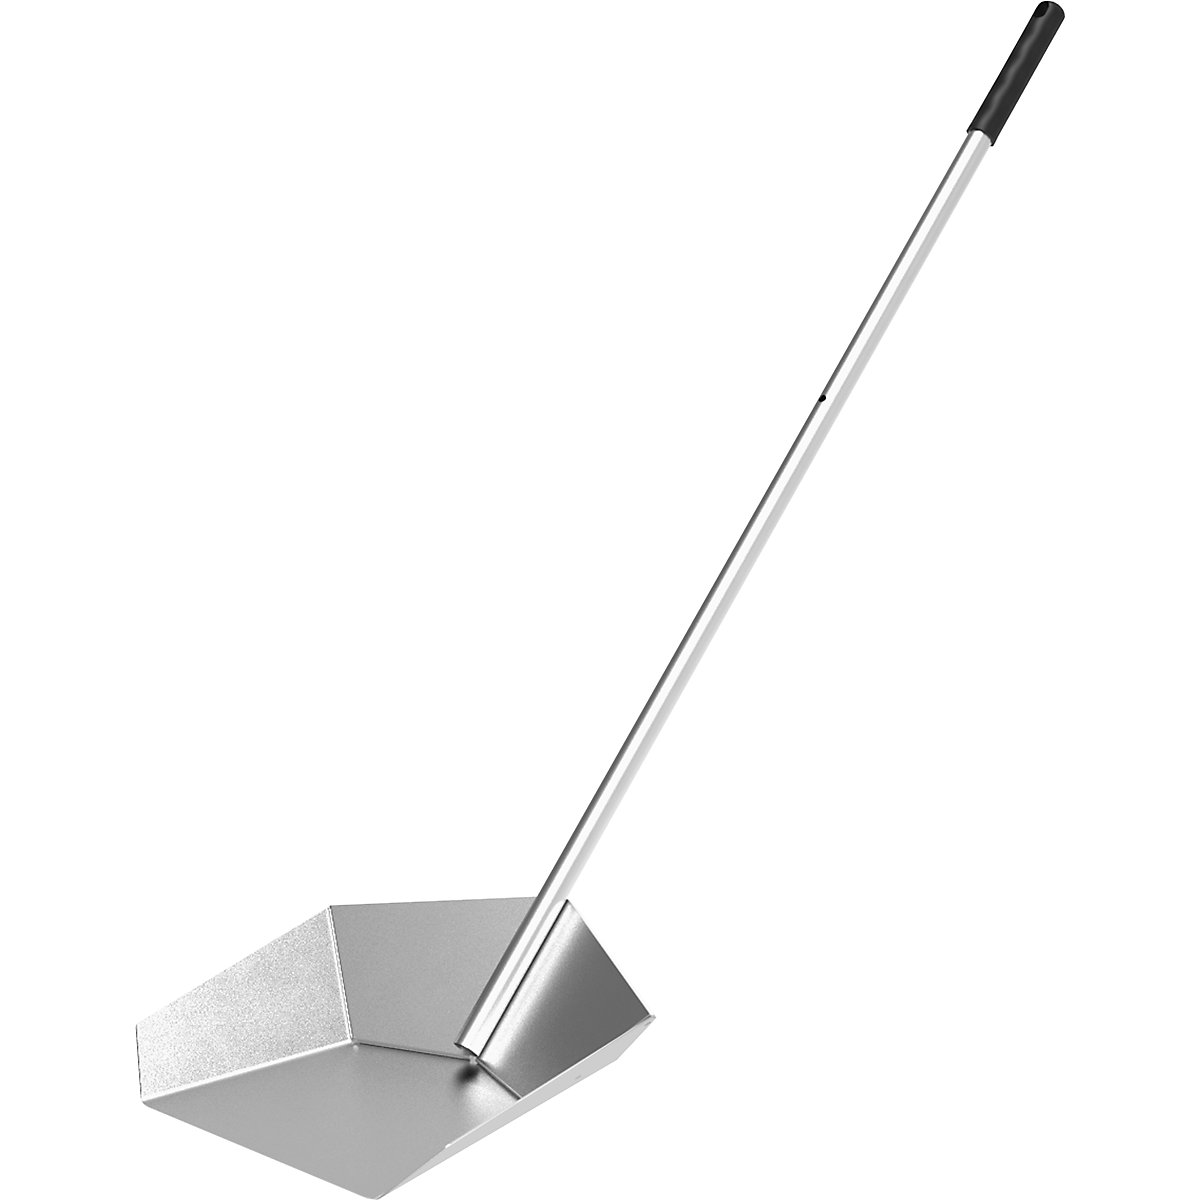 DUSTY SHOVEL hand shovel - FLORA